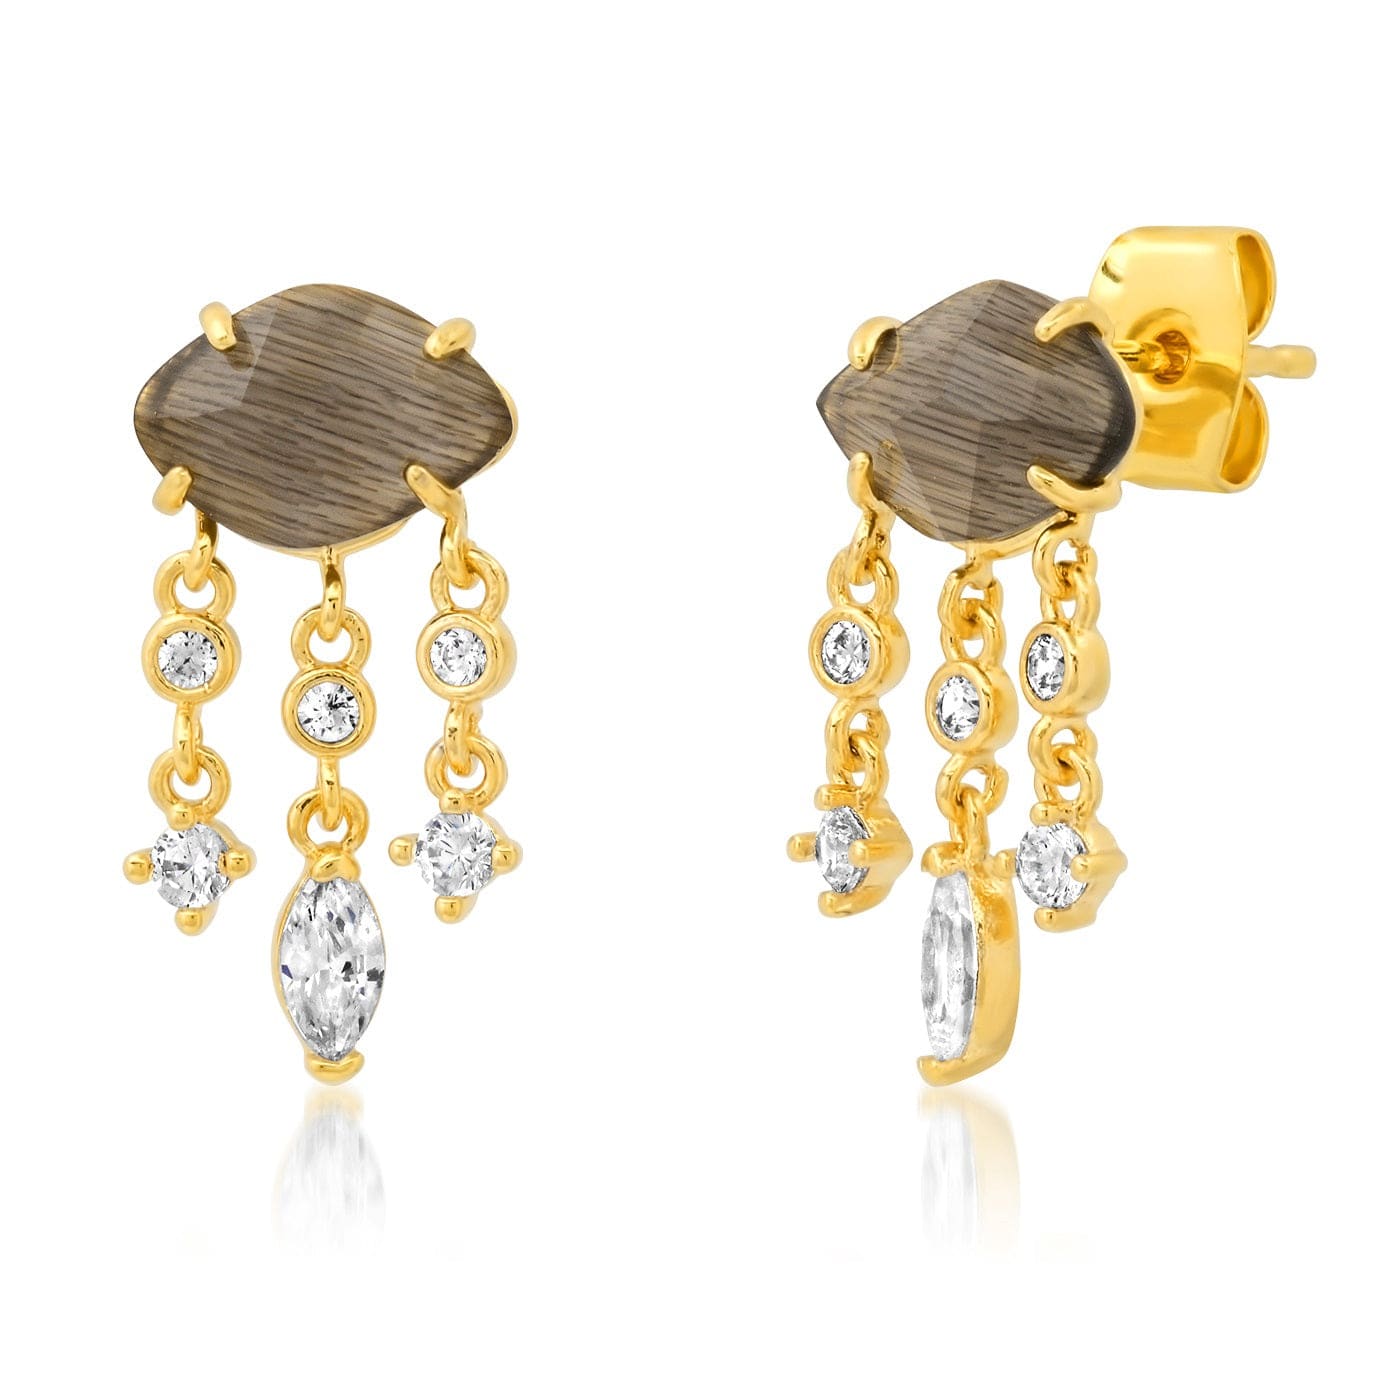 TAI JEWELRY Earrings Grey Rose Quartz Studs With CZ Dangles